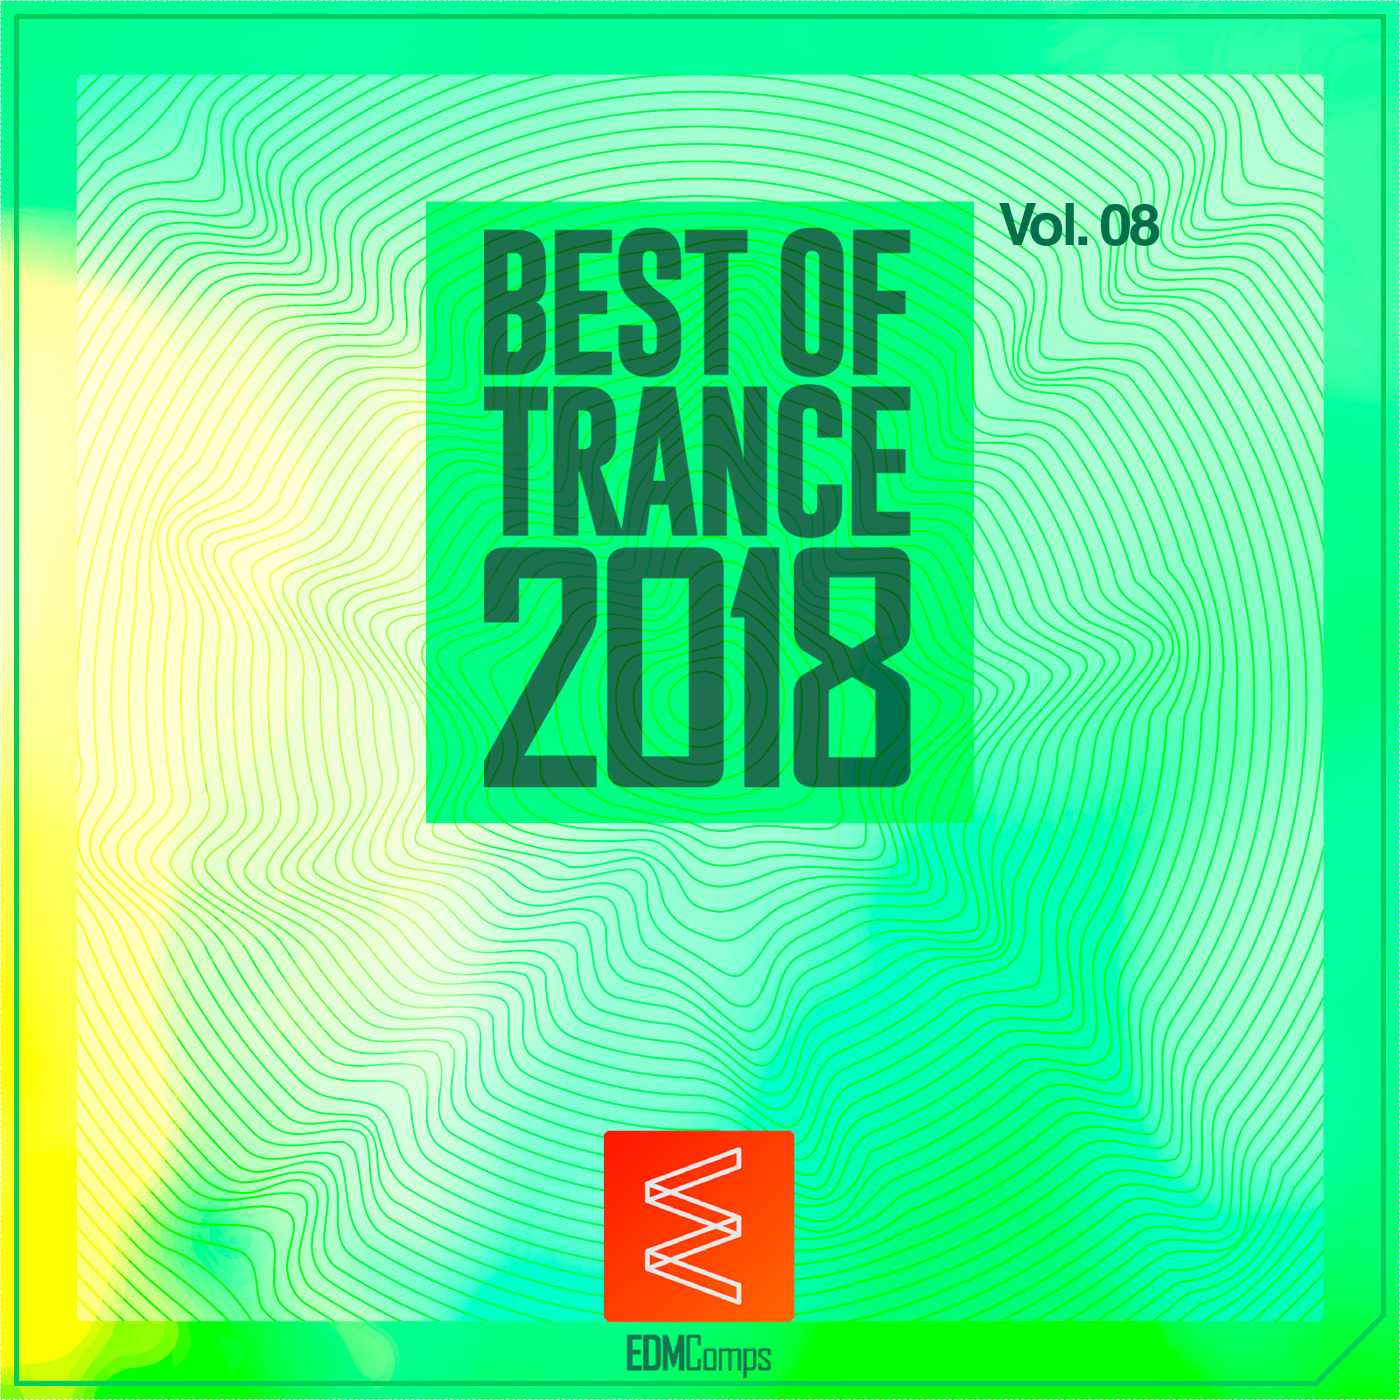 Best of Trance 2018, Vol. 08